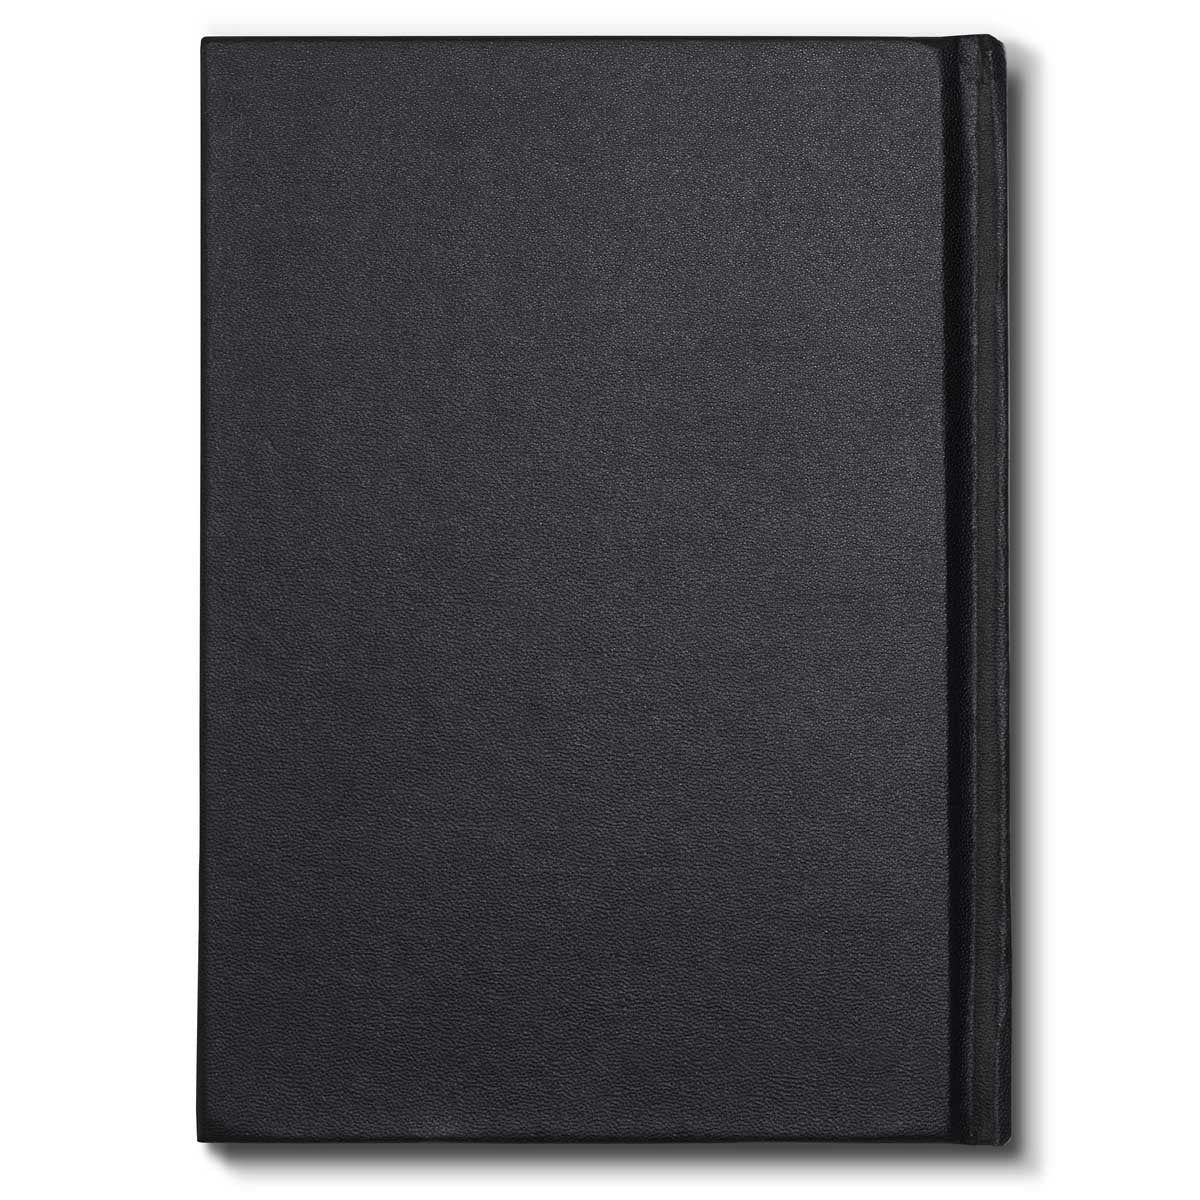 Winsor and Newton - Hardback Sketch Book 170gsm - A5 Bound